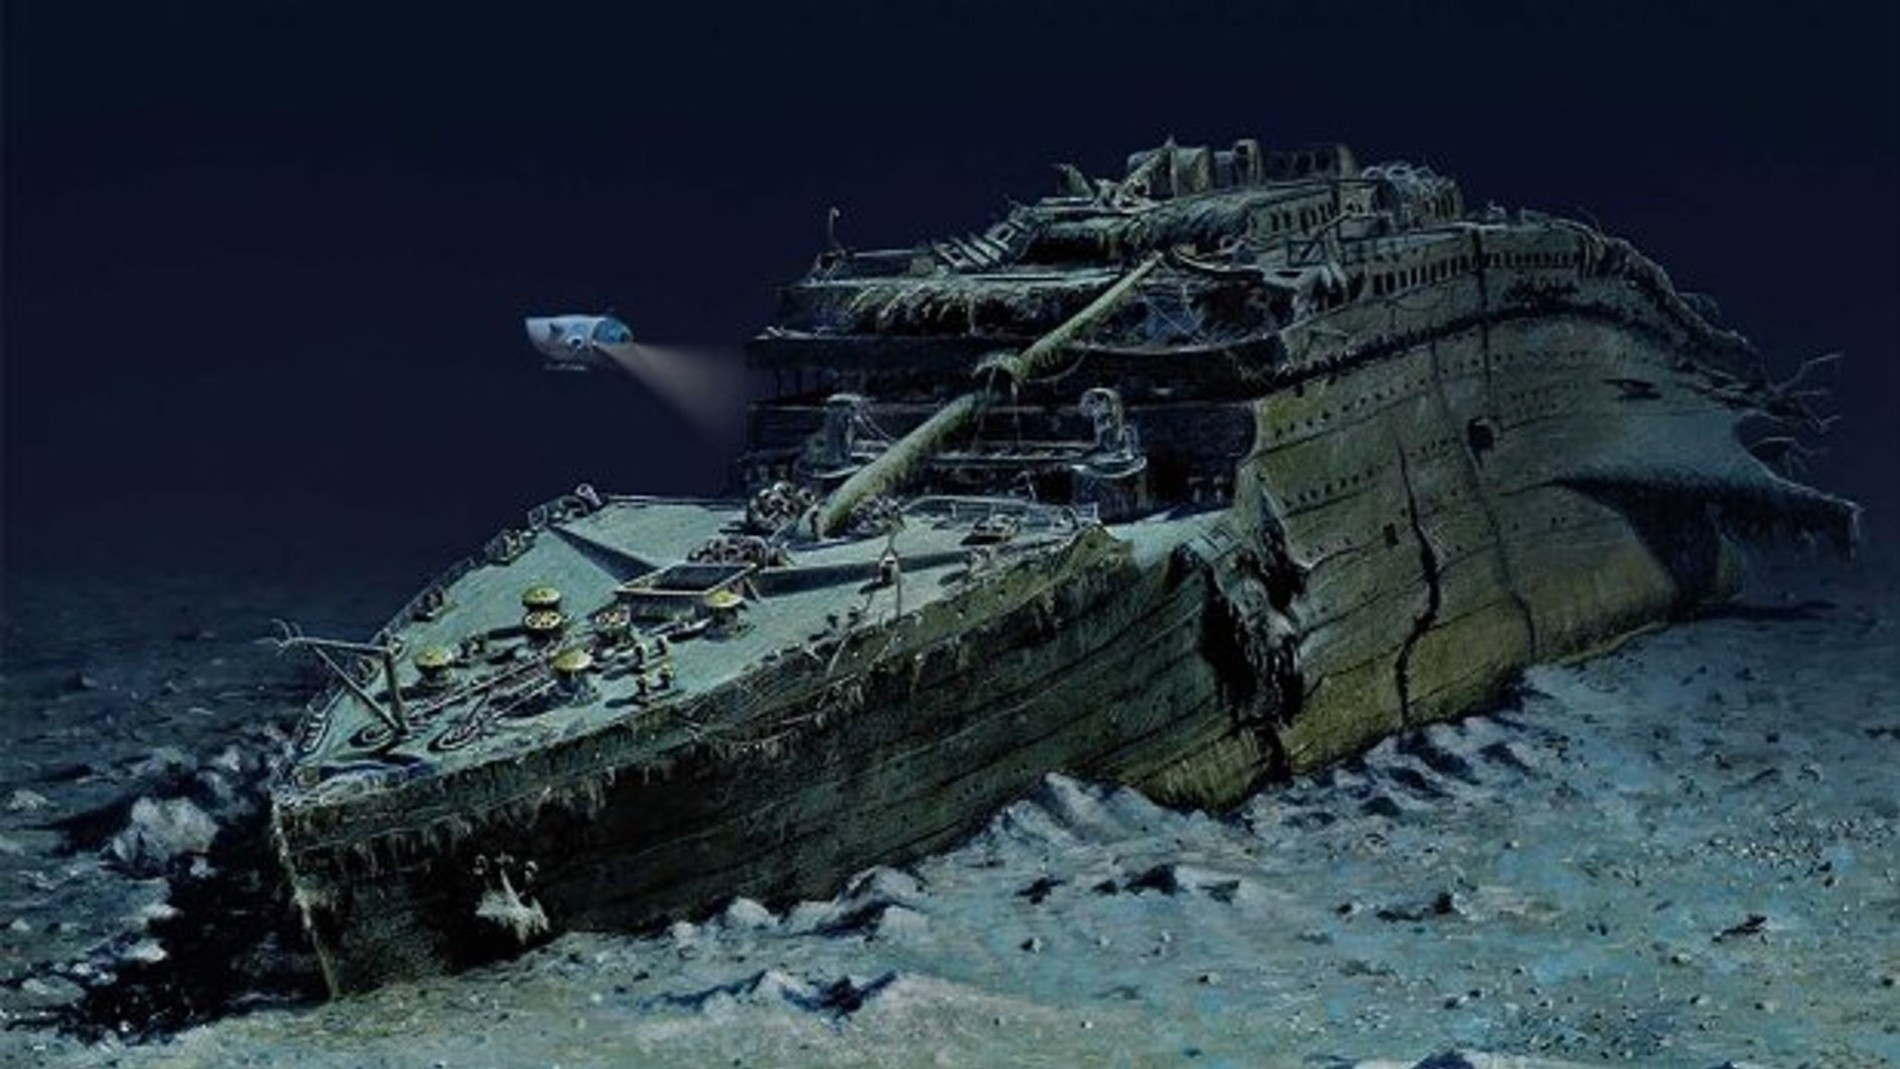 Обломки затонувшего «Титаника»
Фото: The Irish Sun